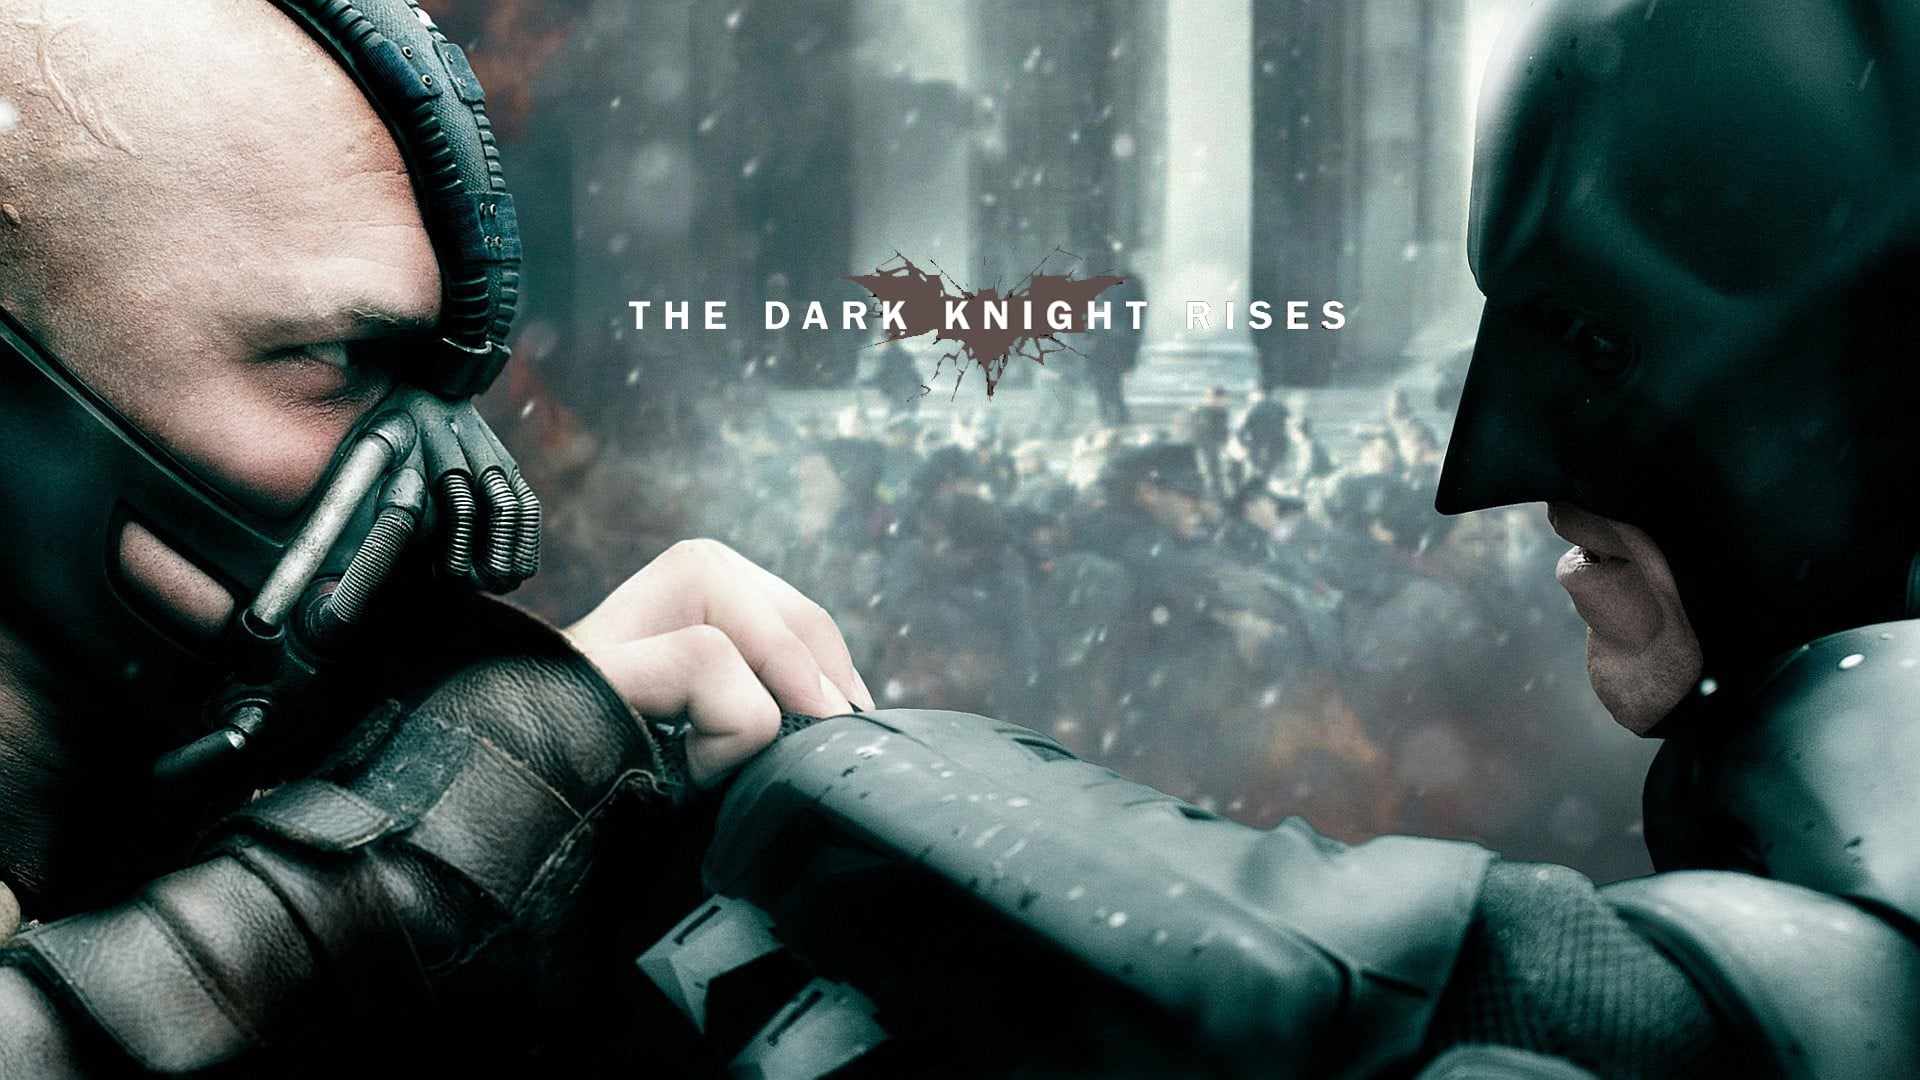 The Dark Knight Rises (Limited Screening)